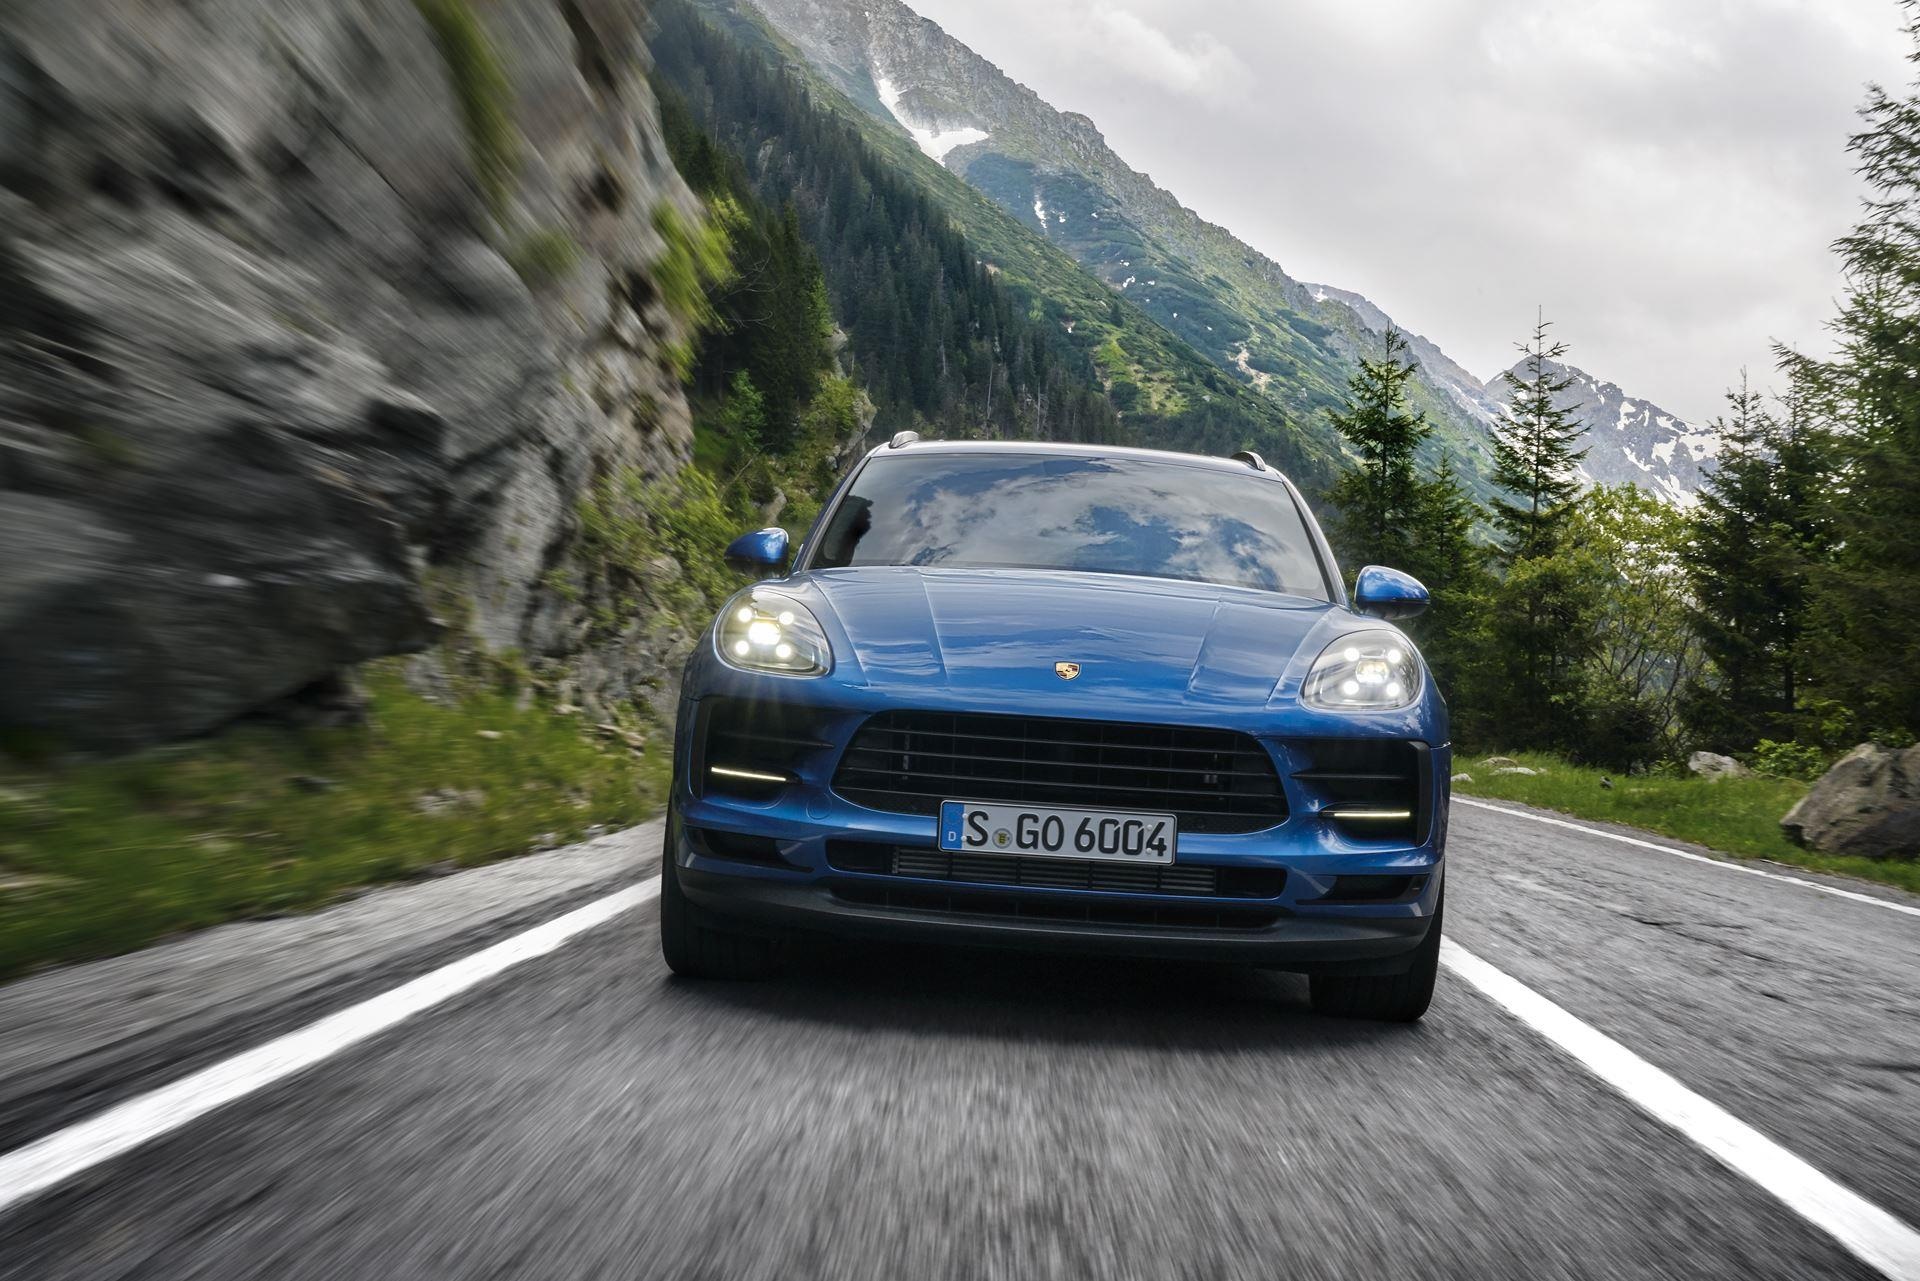 Porsche Macan, 2019 model, HD wallpapers, Thrilling performance, 1920x1290 HD Desktop